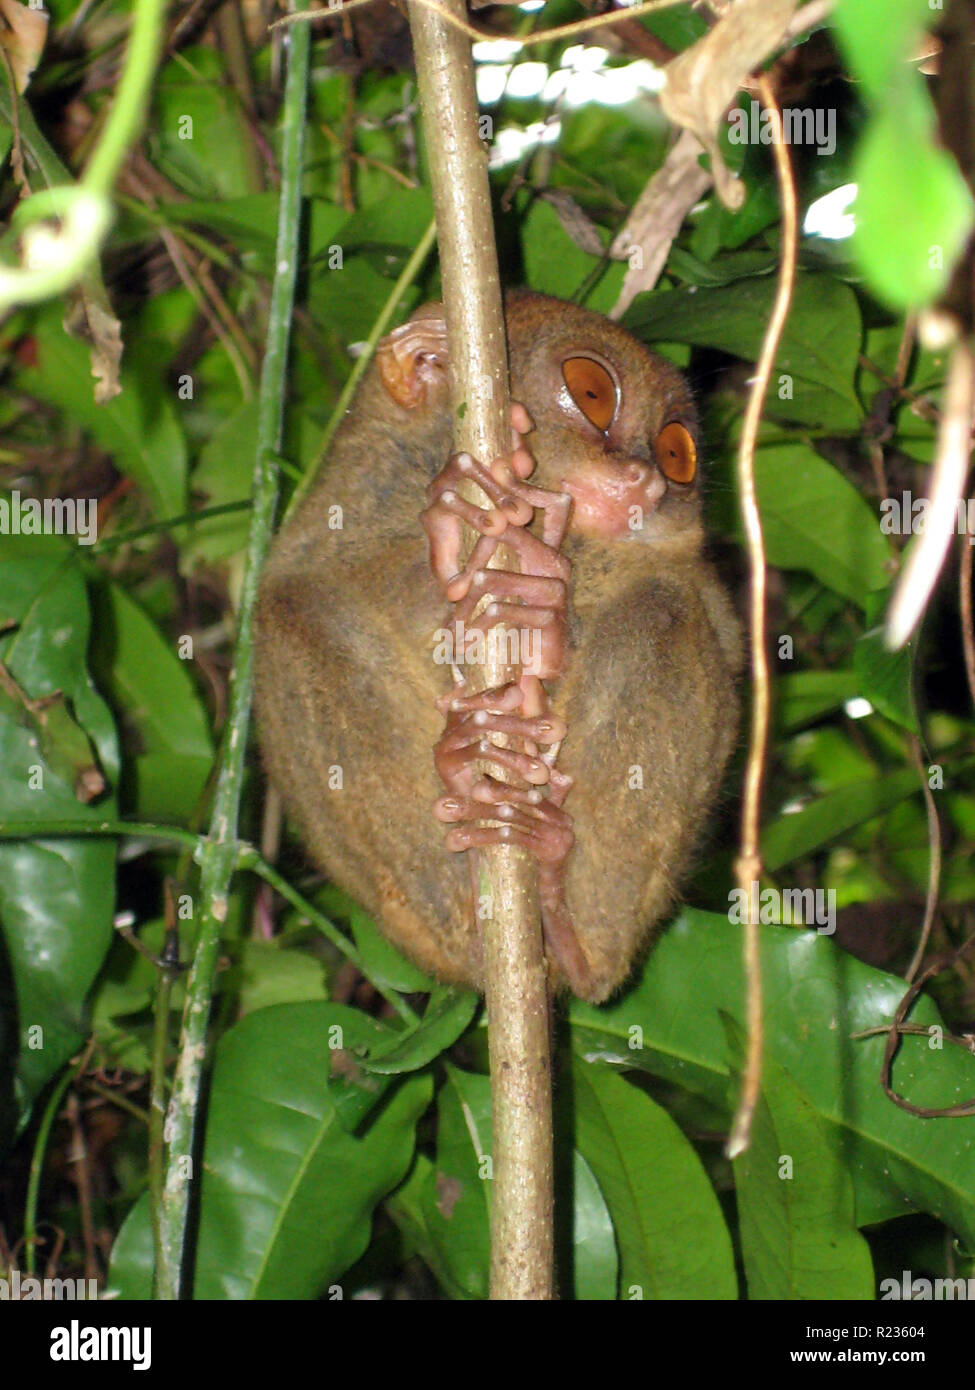 Philippine tarsier (Tarsius syrichta), world's smallest monkey, one of the smallest known primates, Bohol, Philippines Stock Photo